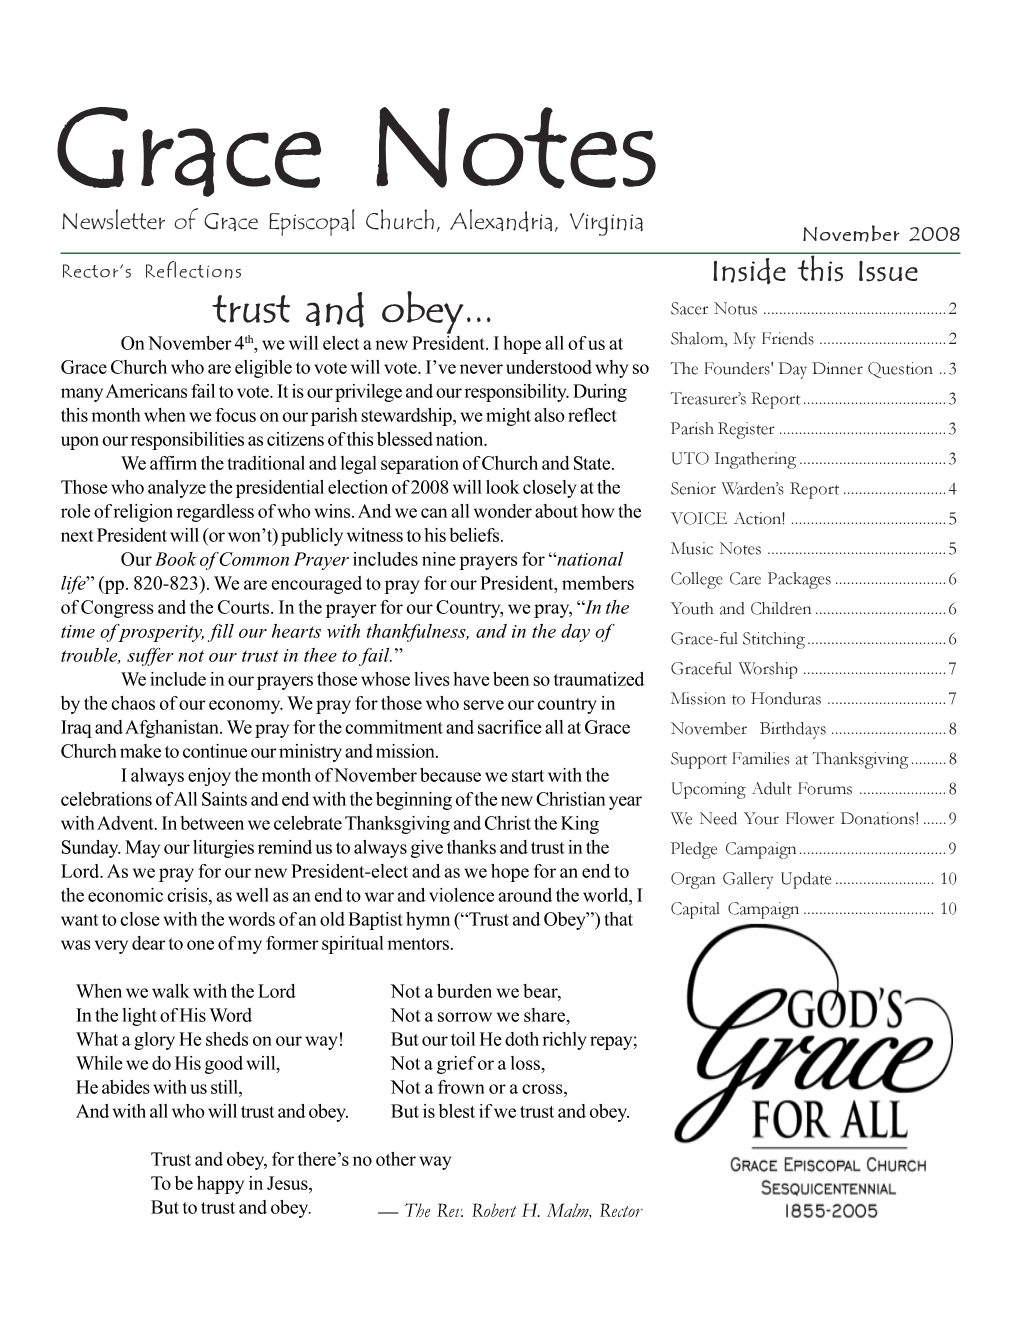 Grace Notes: November 2008